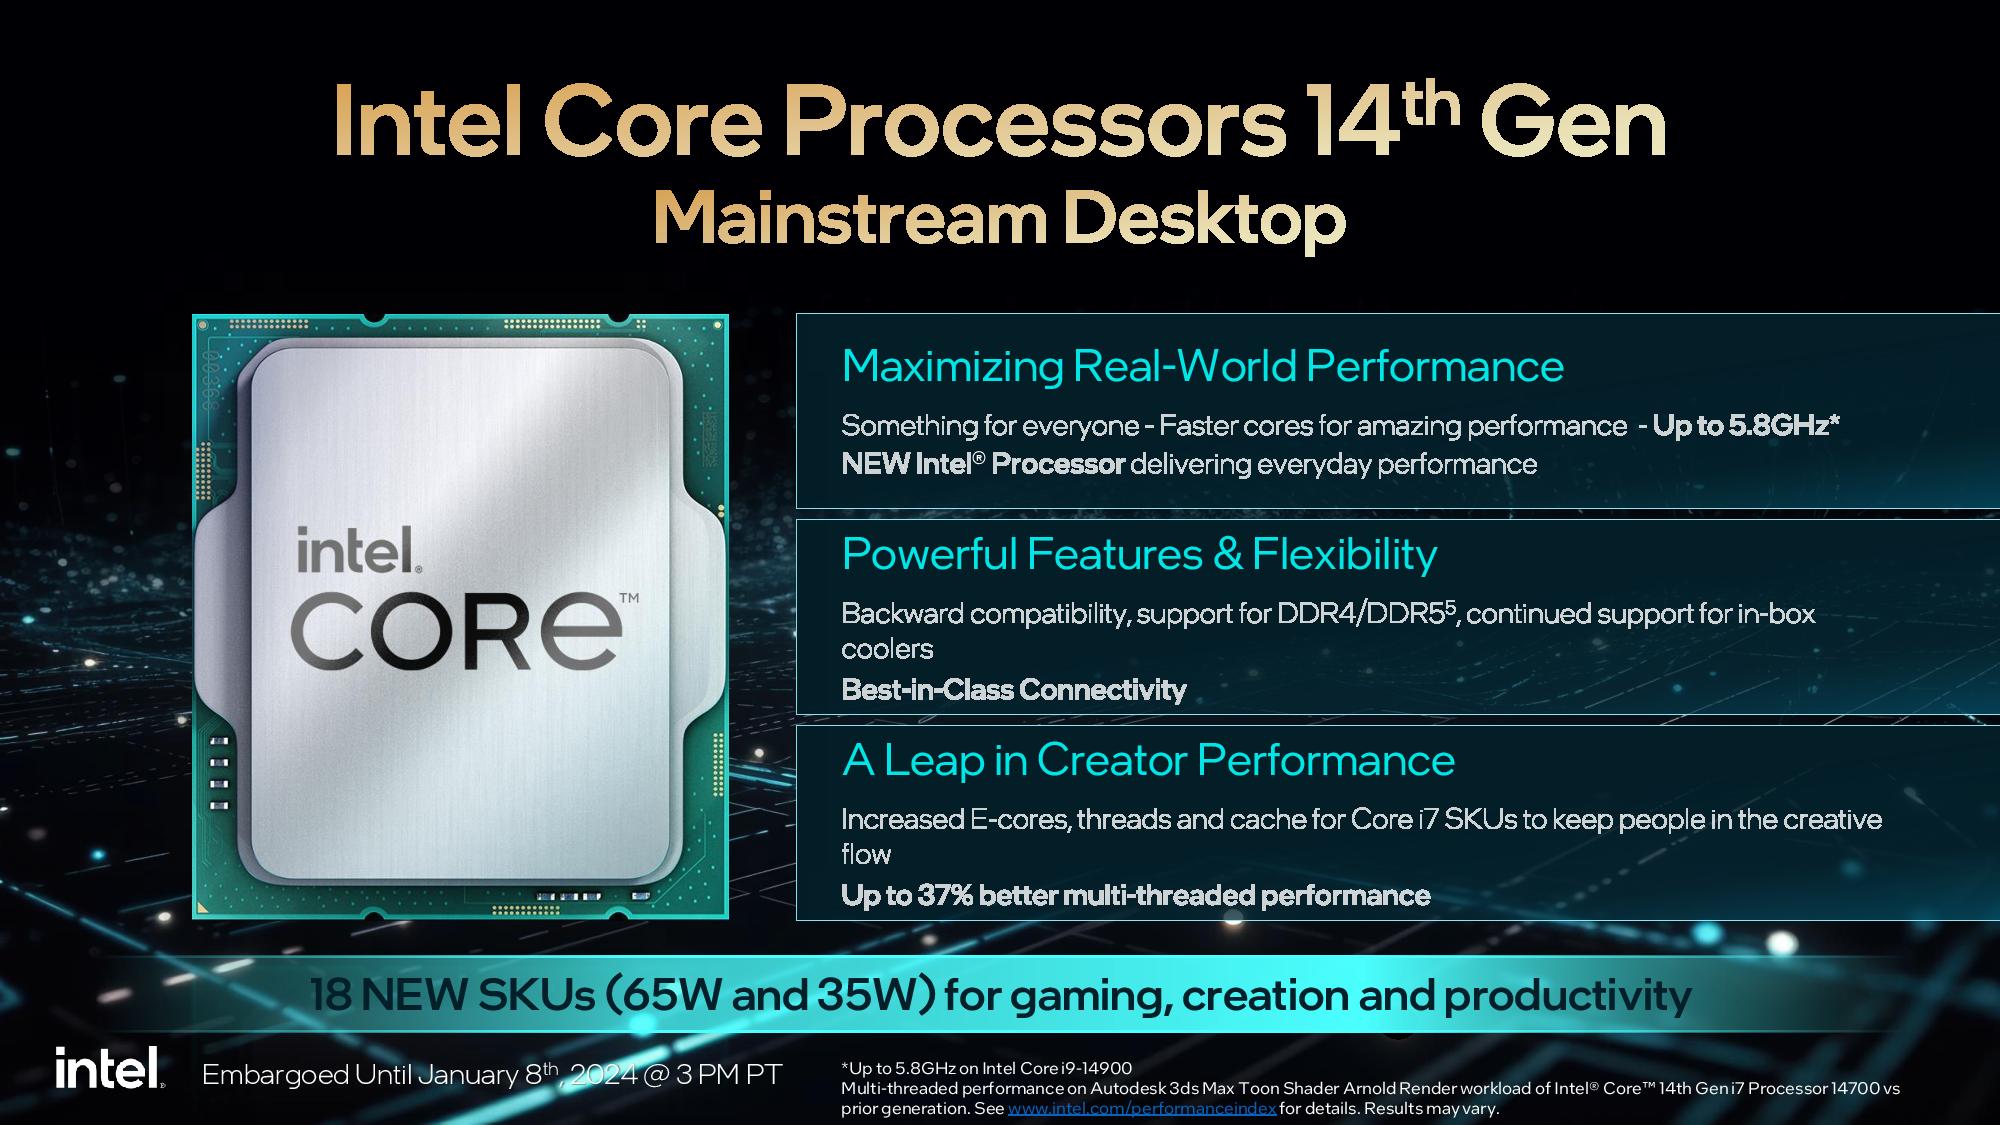 Intel 8th-gen Core i7 vs. 7th-gen Core i7 CPUs: An upgrade that's finally  worth it